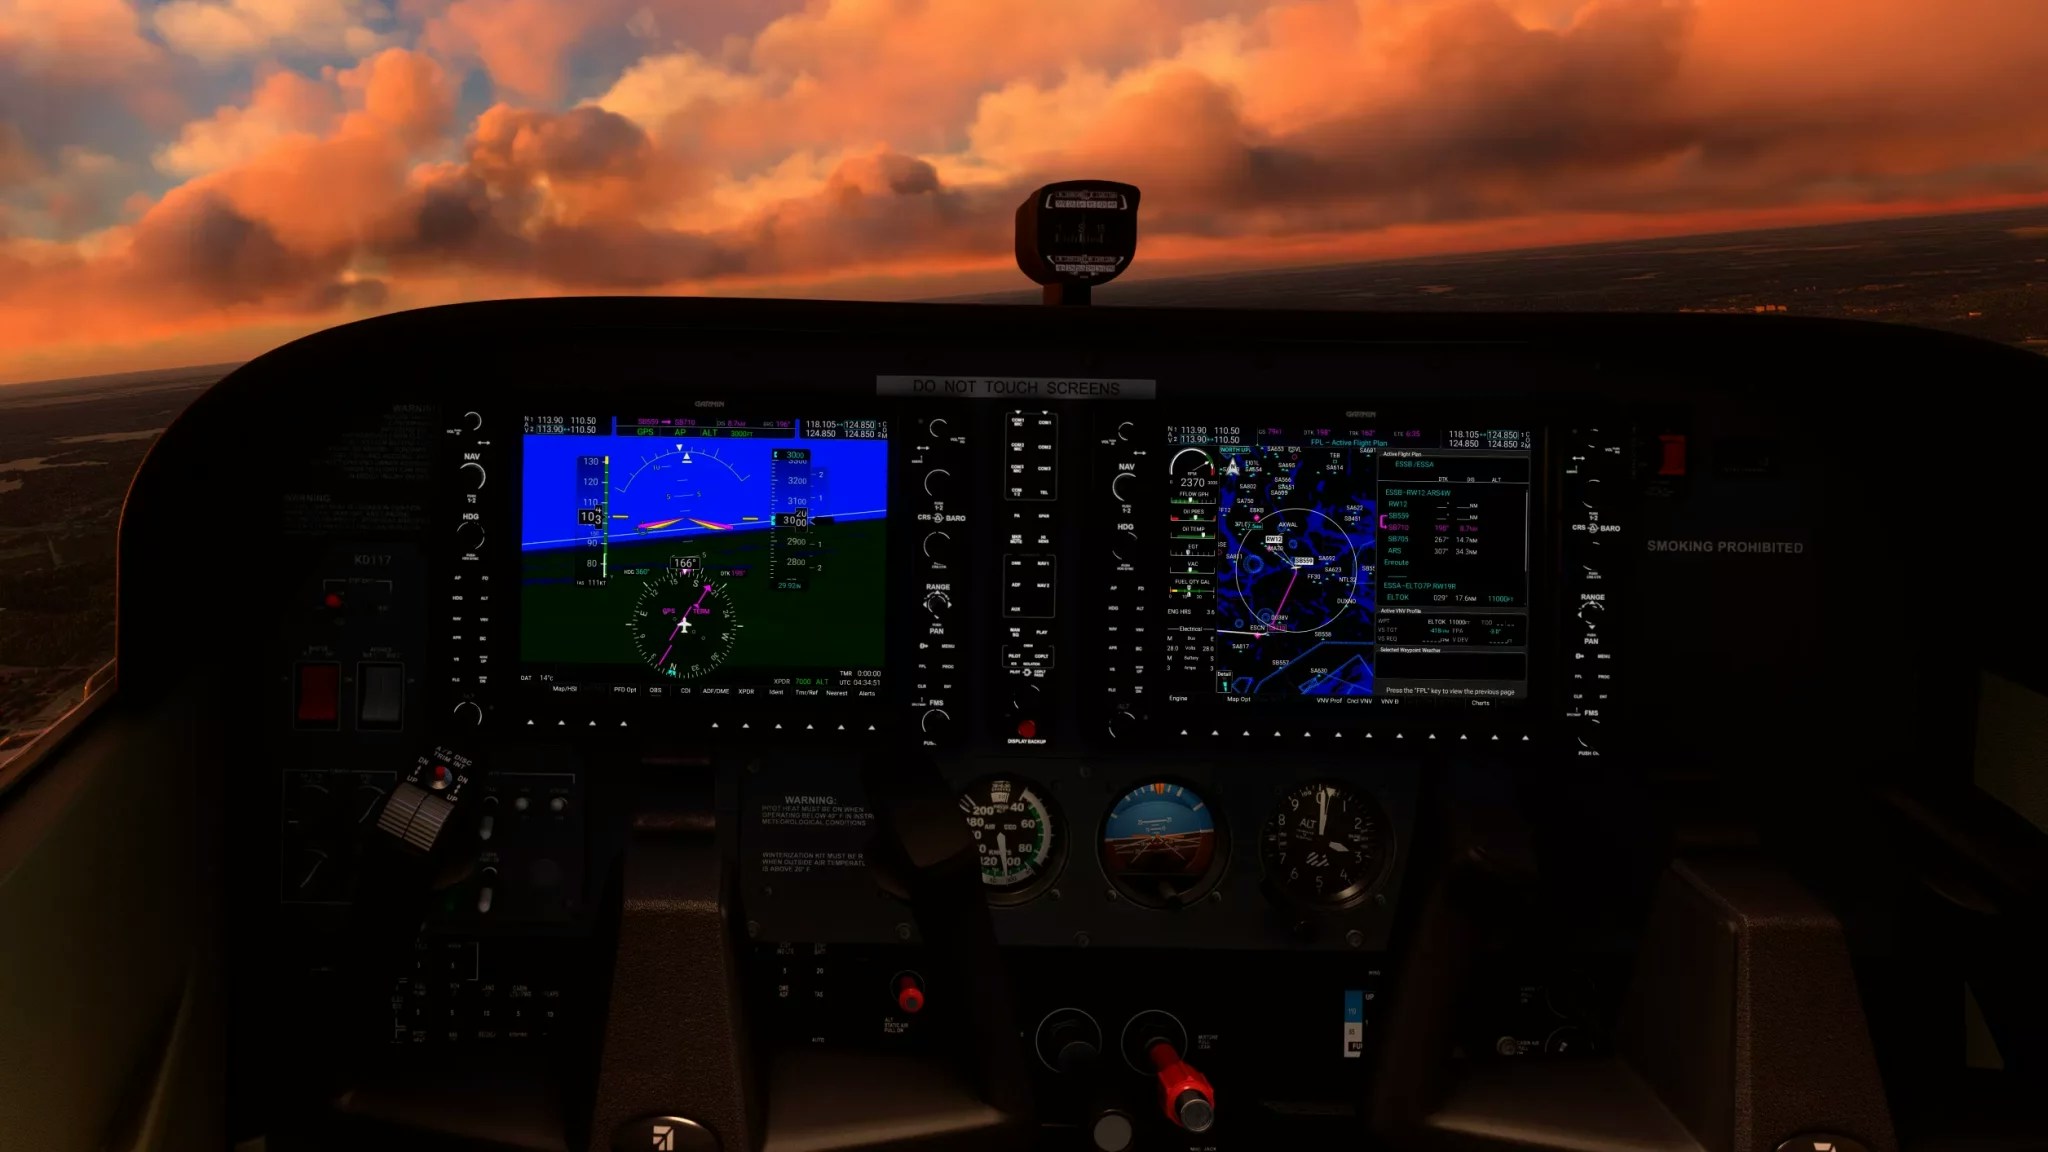 Navigraph's Avionics Plugin G1000 NXi Support